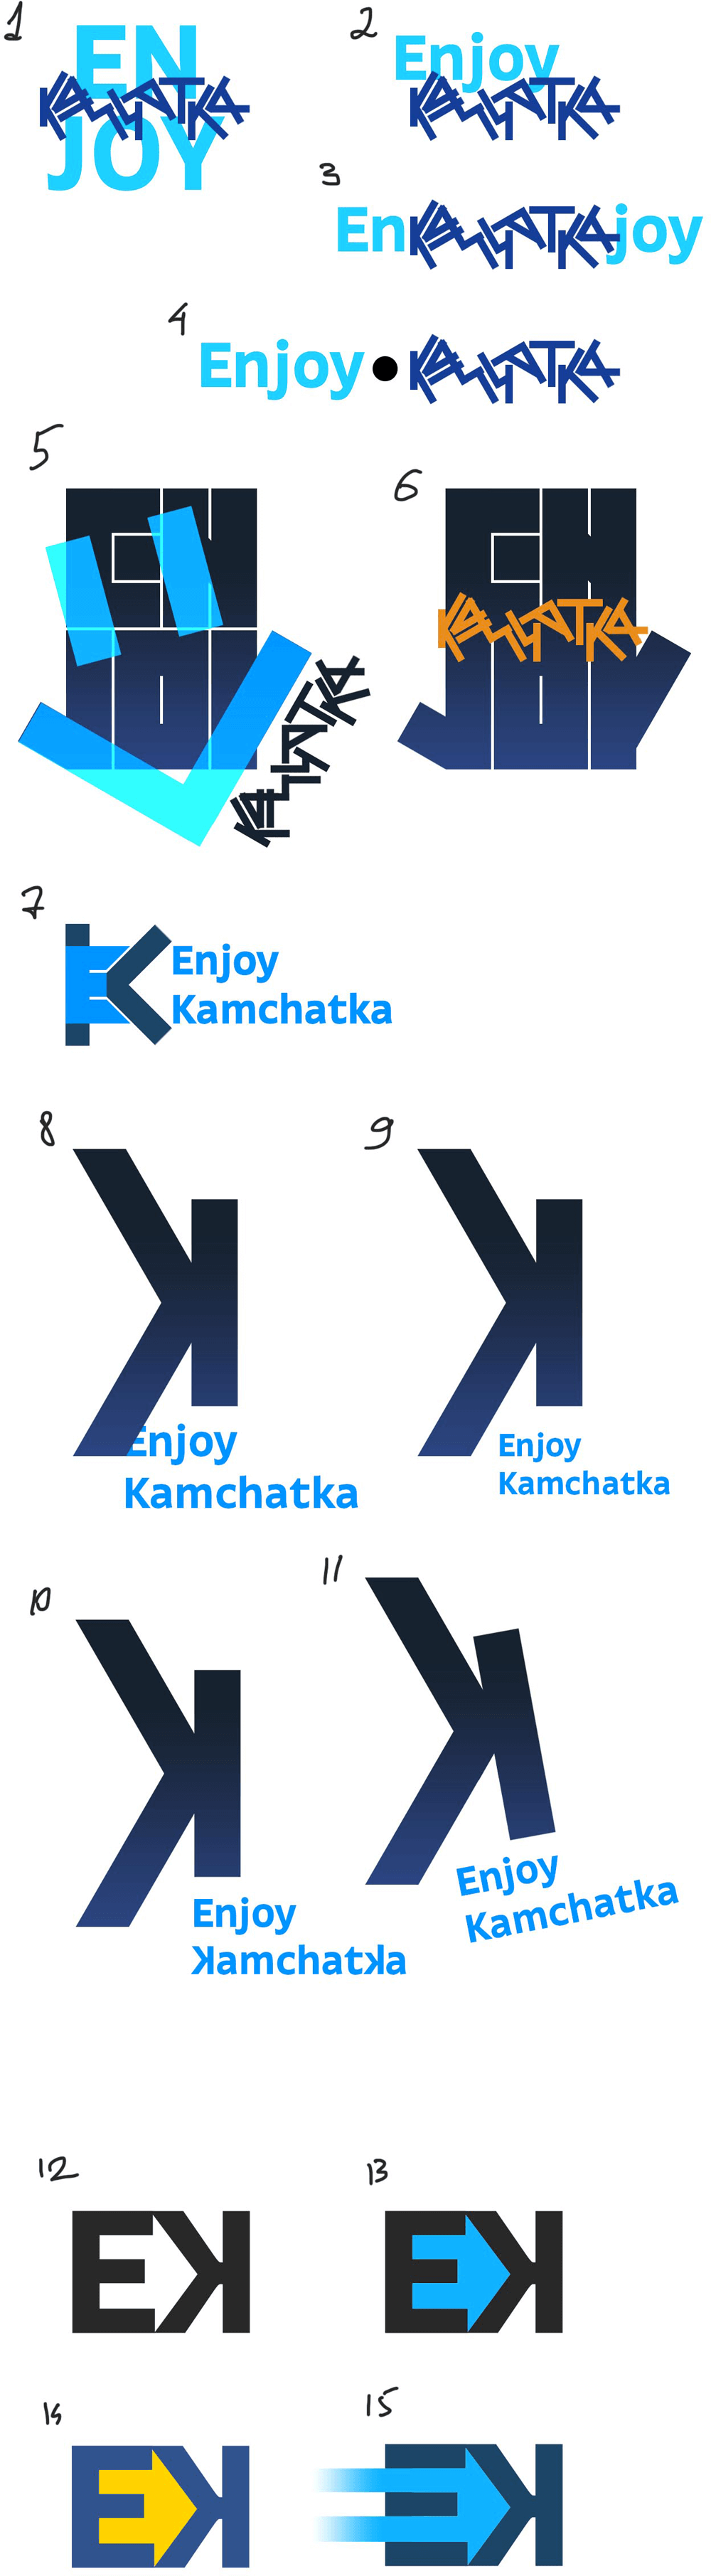 enjoy kamchatka process 27